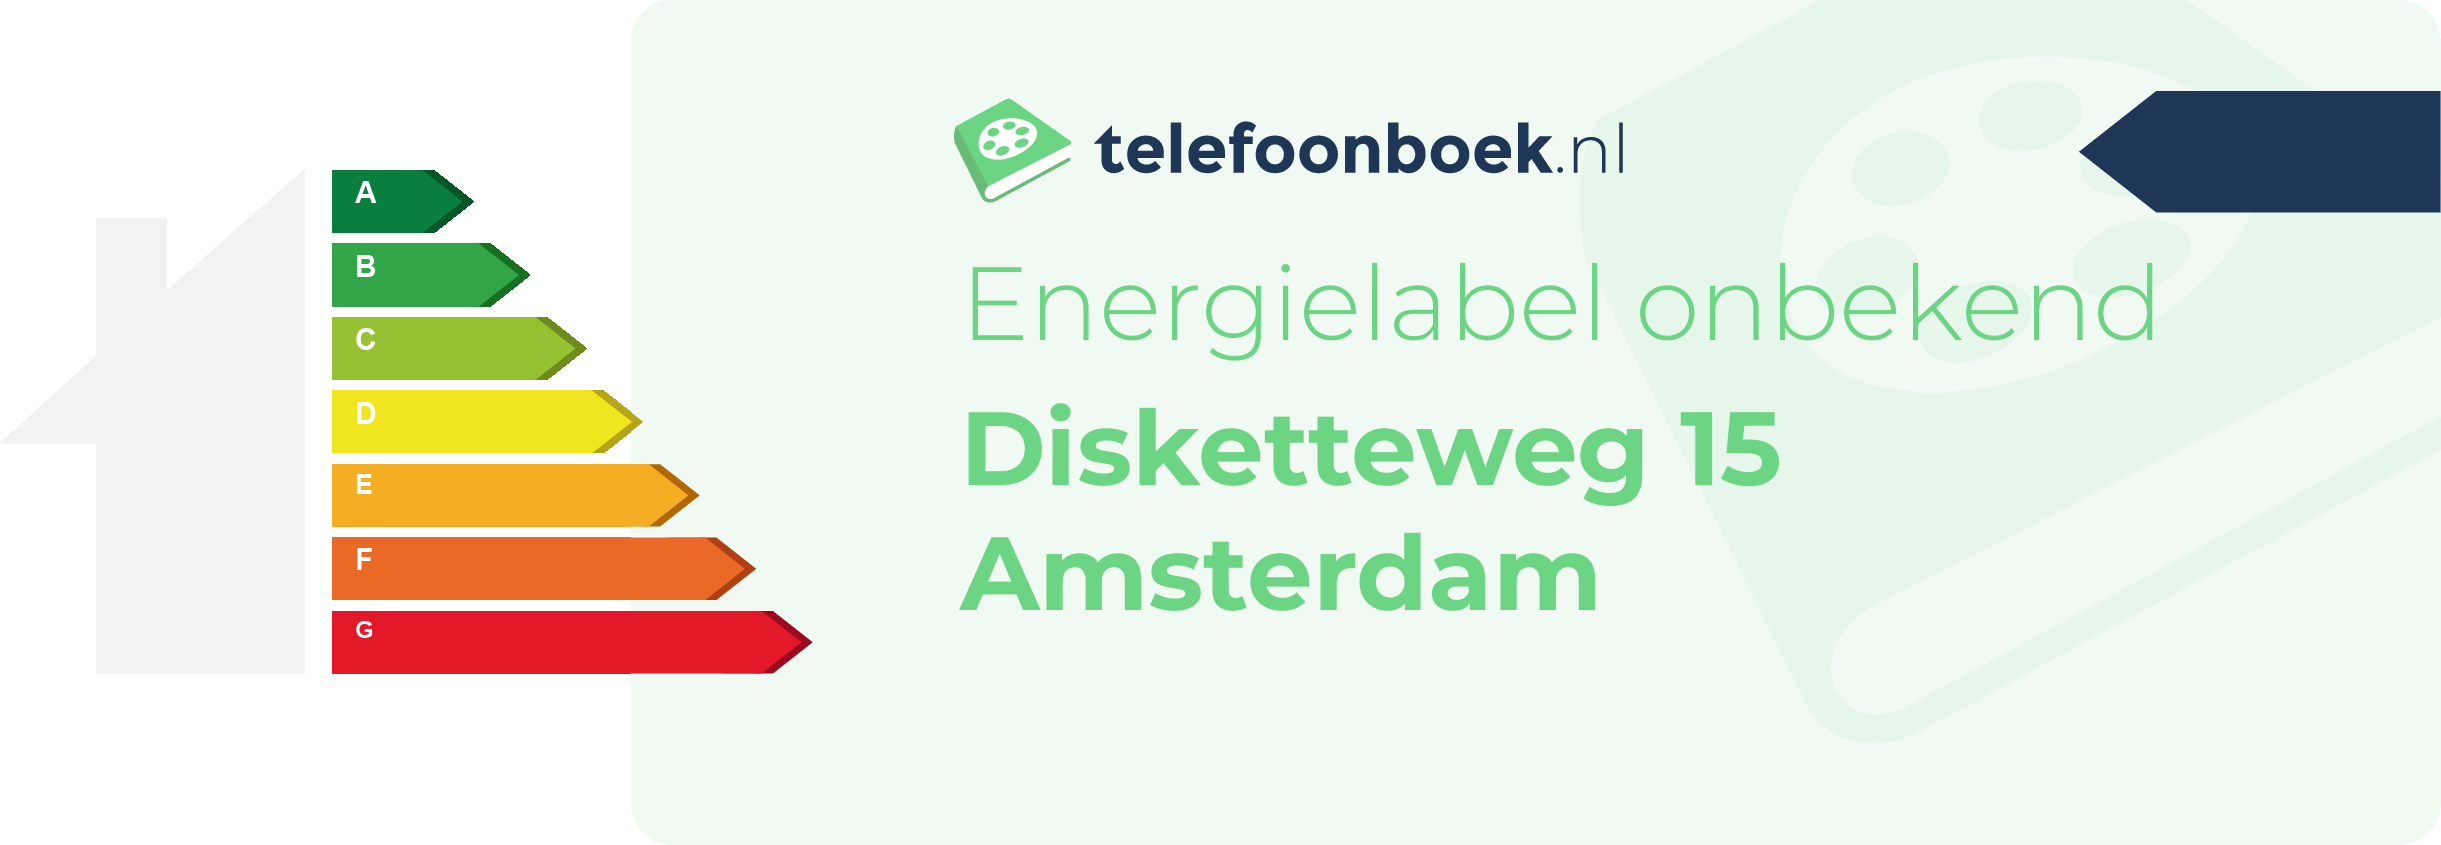 Energielabel Disketteweg 15 Amsterdam